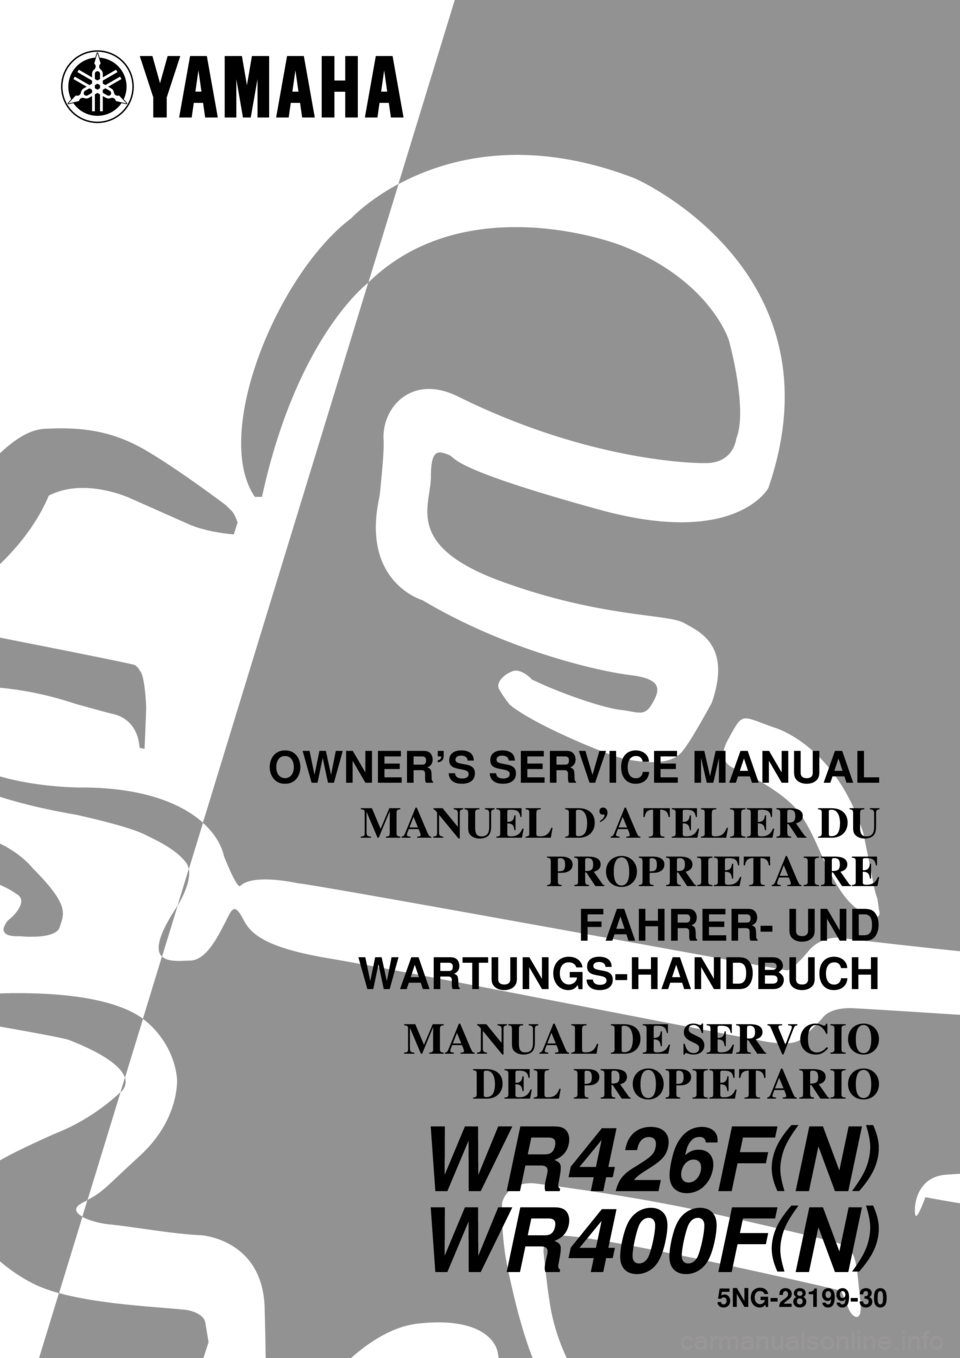 YAMAHA WR 400F 2001  Betriebsanleitungen (in German)      
 
 
 
5NG-28199-30
WR426F(N)
WR400F(N)
OWNER’S SERVICE MANUAL
MANUEL D’ATELIER DU
PROPRIETAIRE
FAHRER- UND
WARTUNGS-HANDBUCH
MANUAL DE SERVCIO
DEL PROPIETARIO 